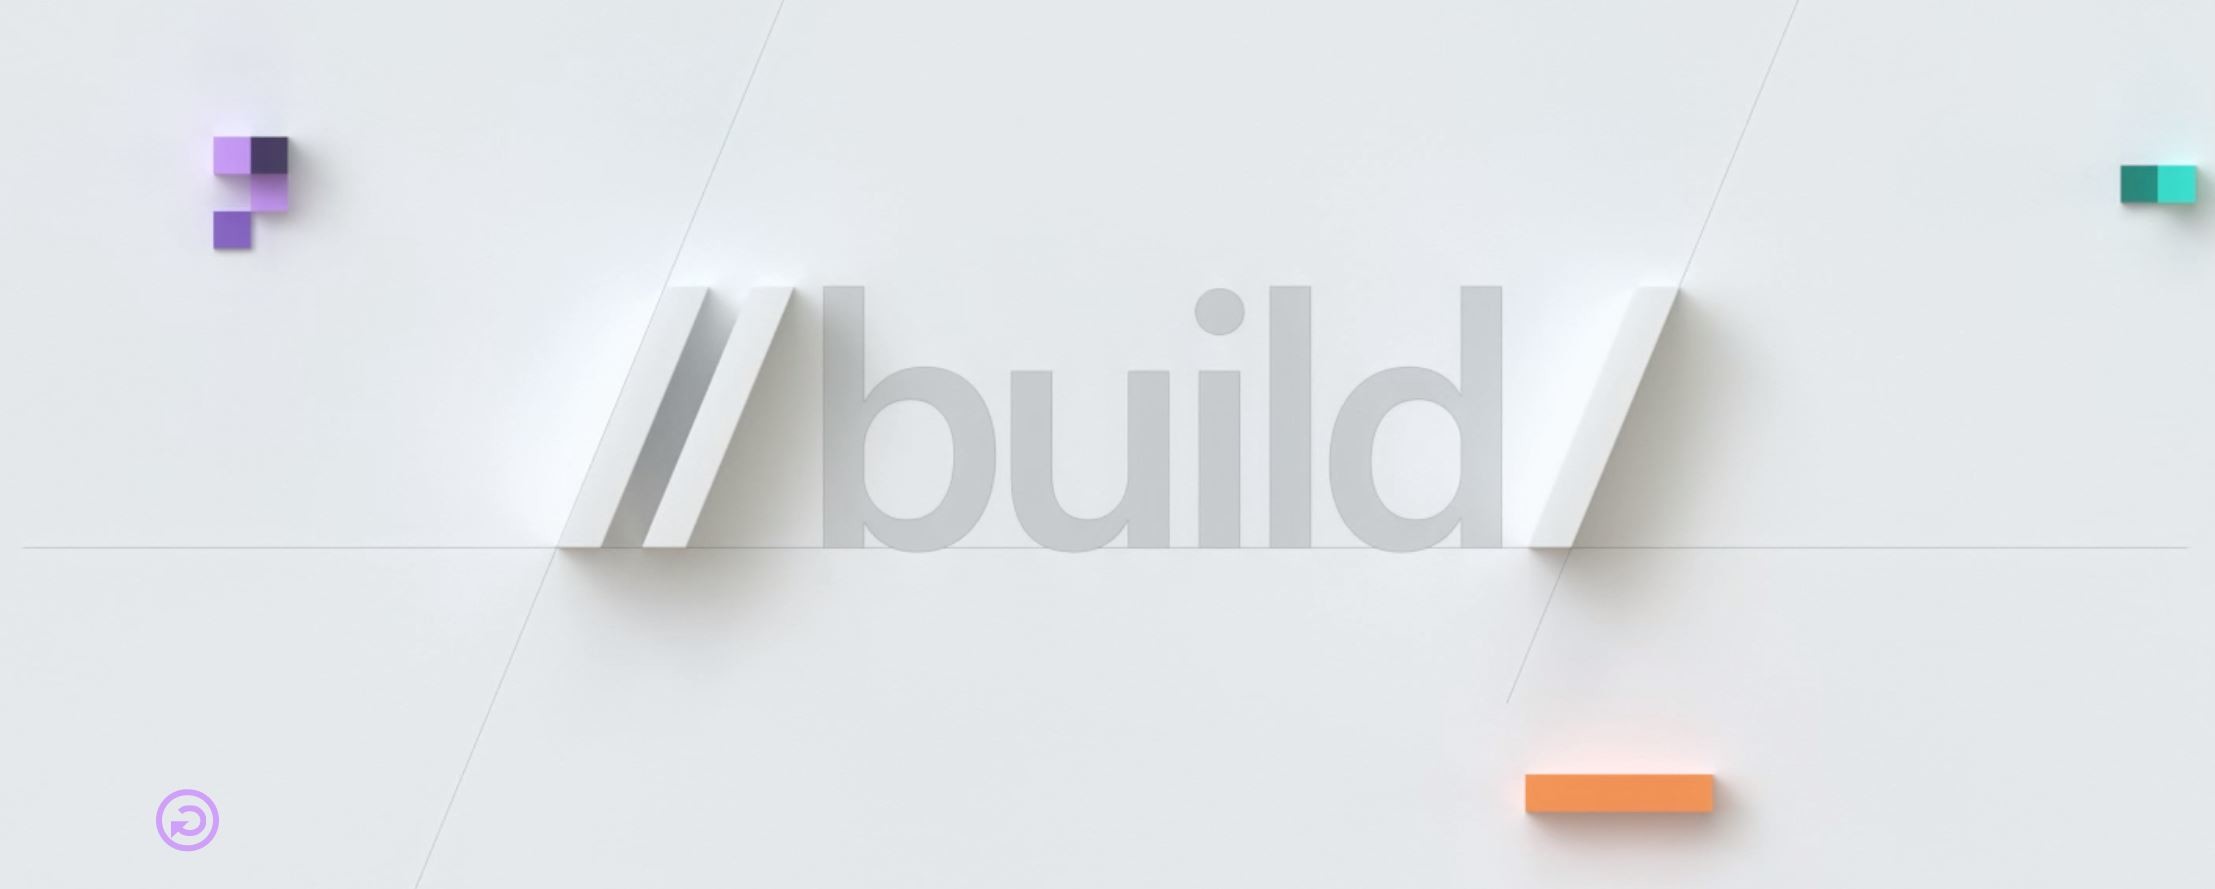 build_2019